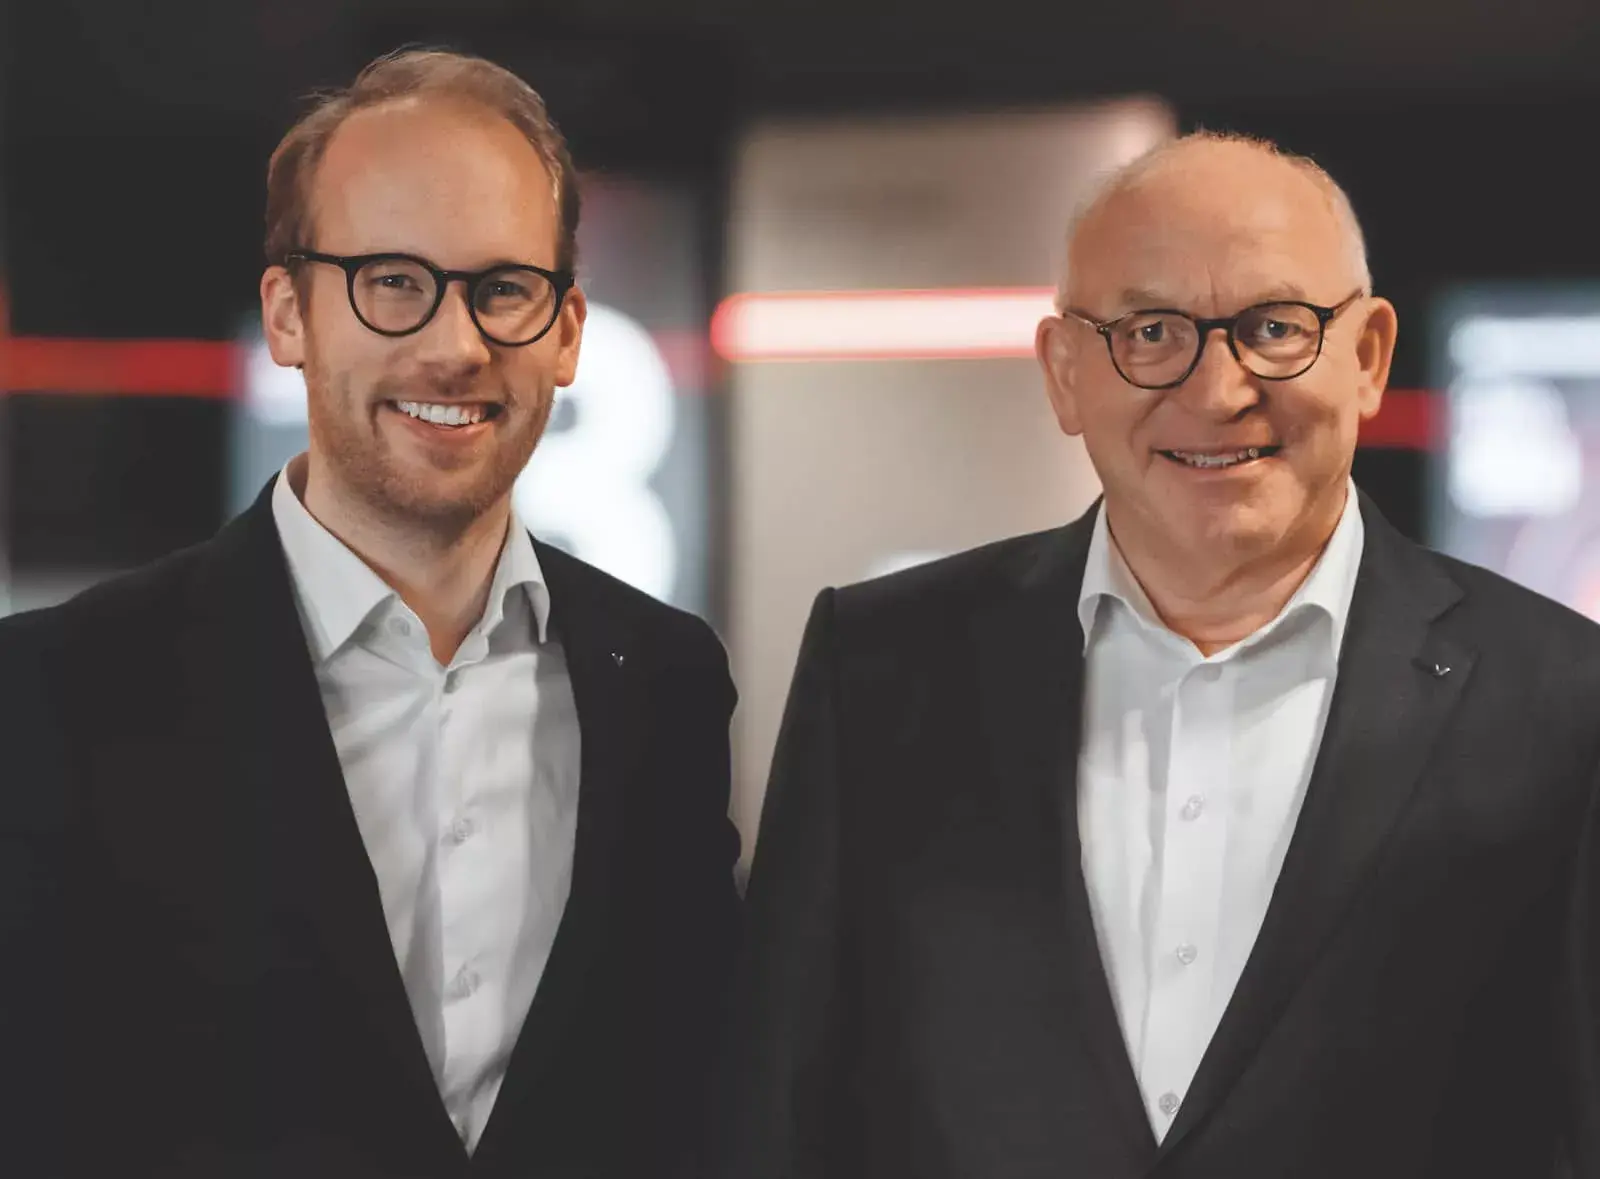 Studium przypadku Asany – liderzy firmy Viessmann, Max i Martin Viessmann